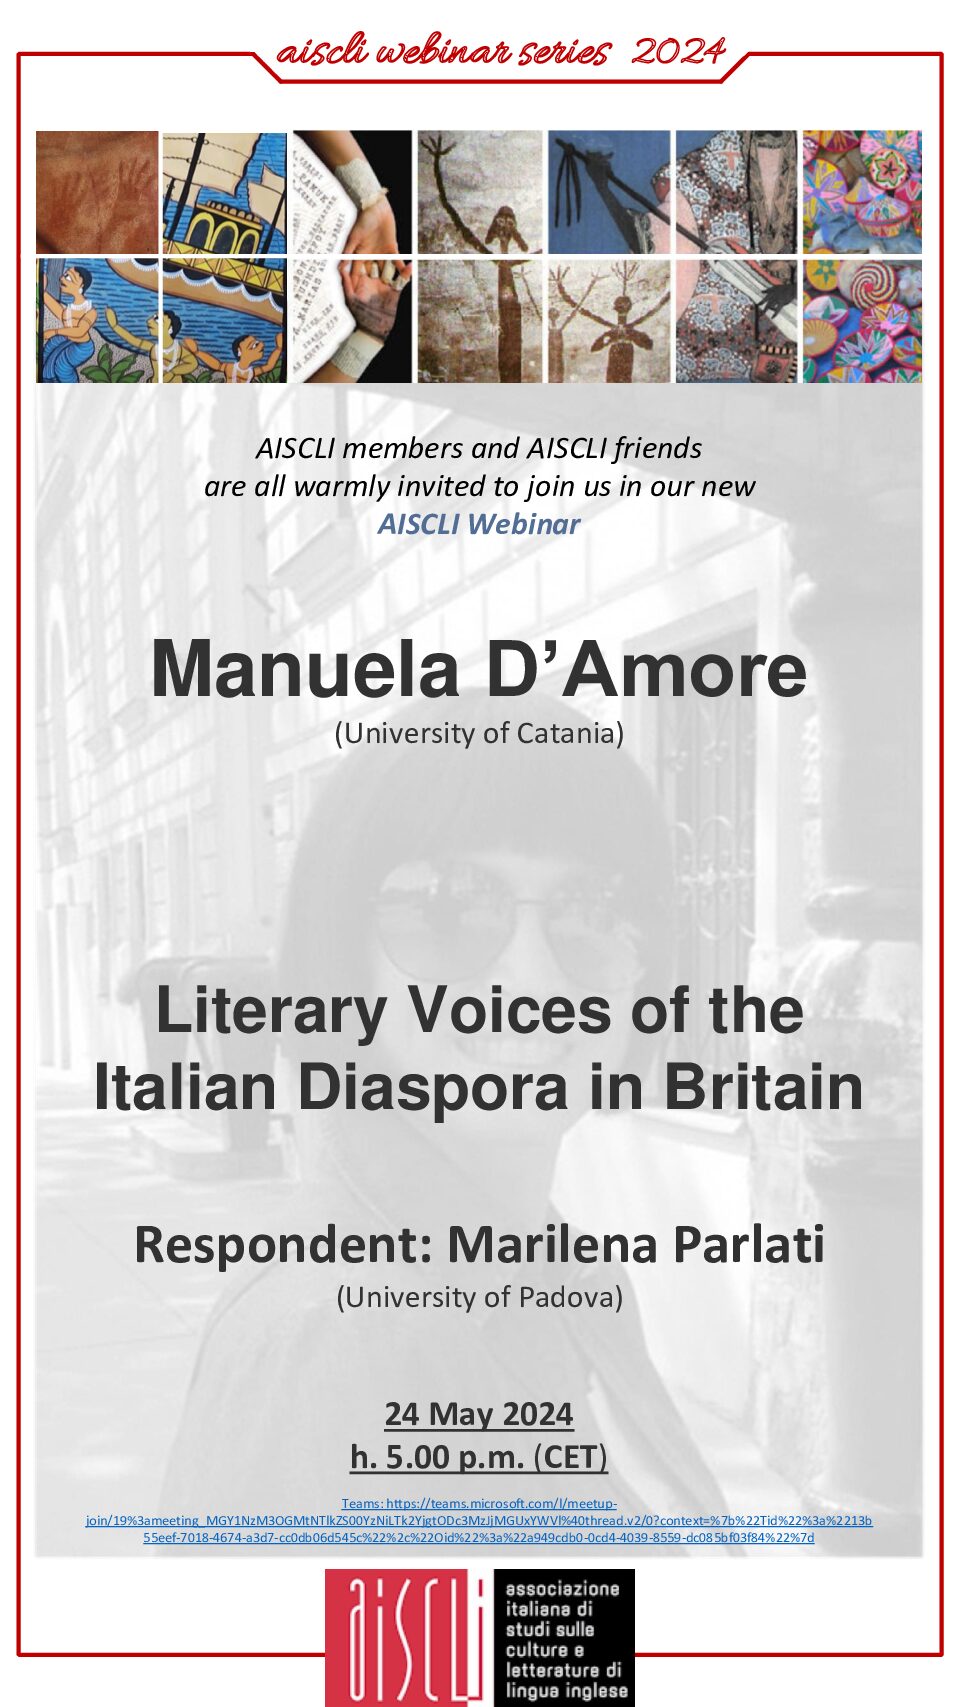 NEW AISCLI  SERIES 2024 – Manuela D’Amore presents her book “Literary Voices of the Italian Diaspora in Britain”. Respondent: Marilena Parlati